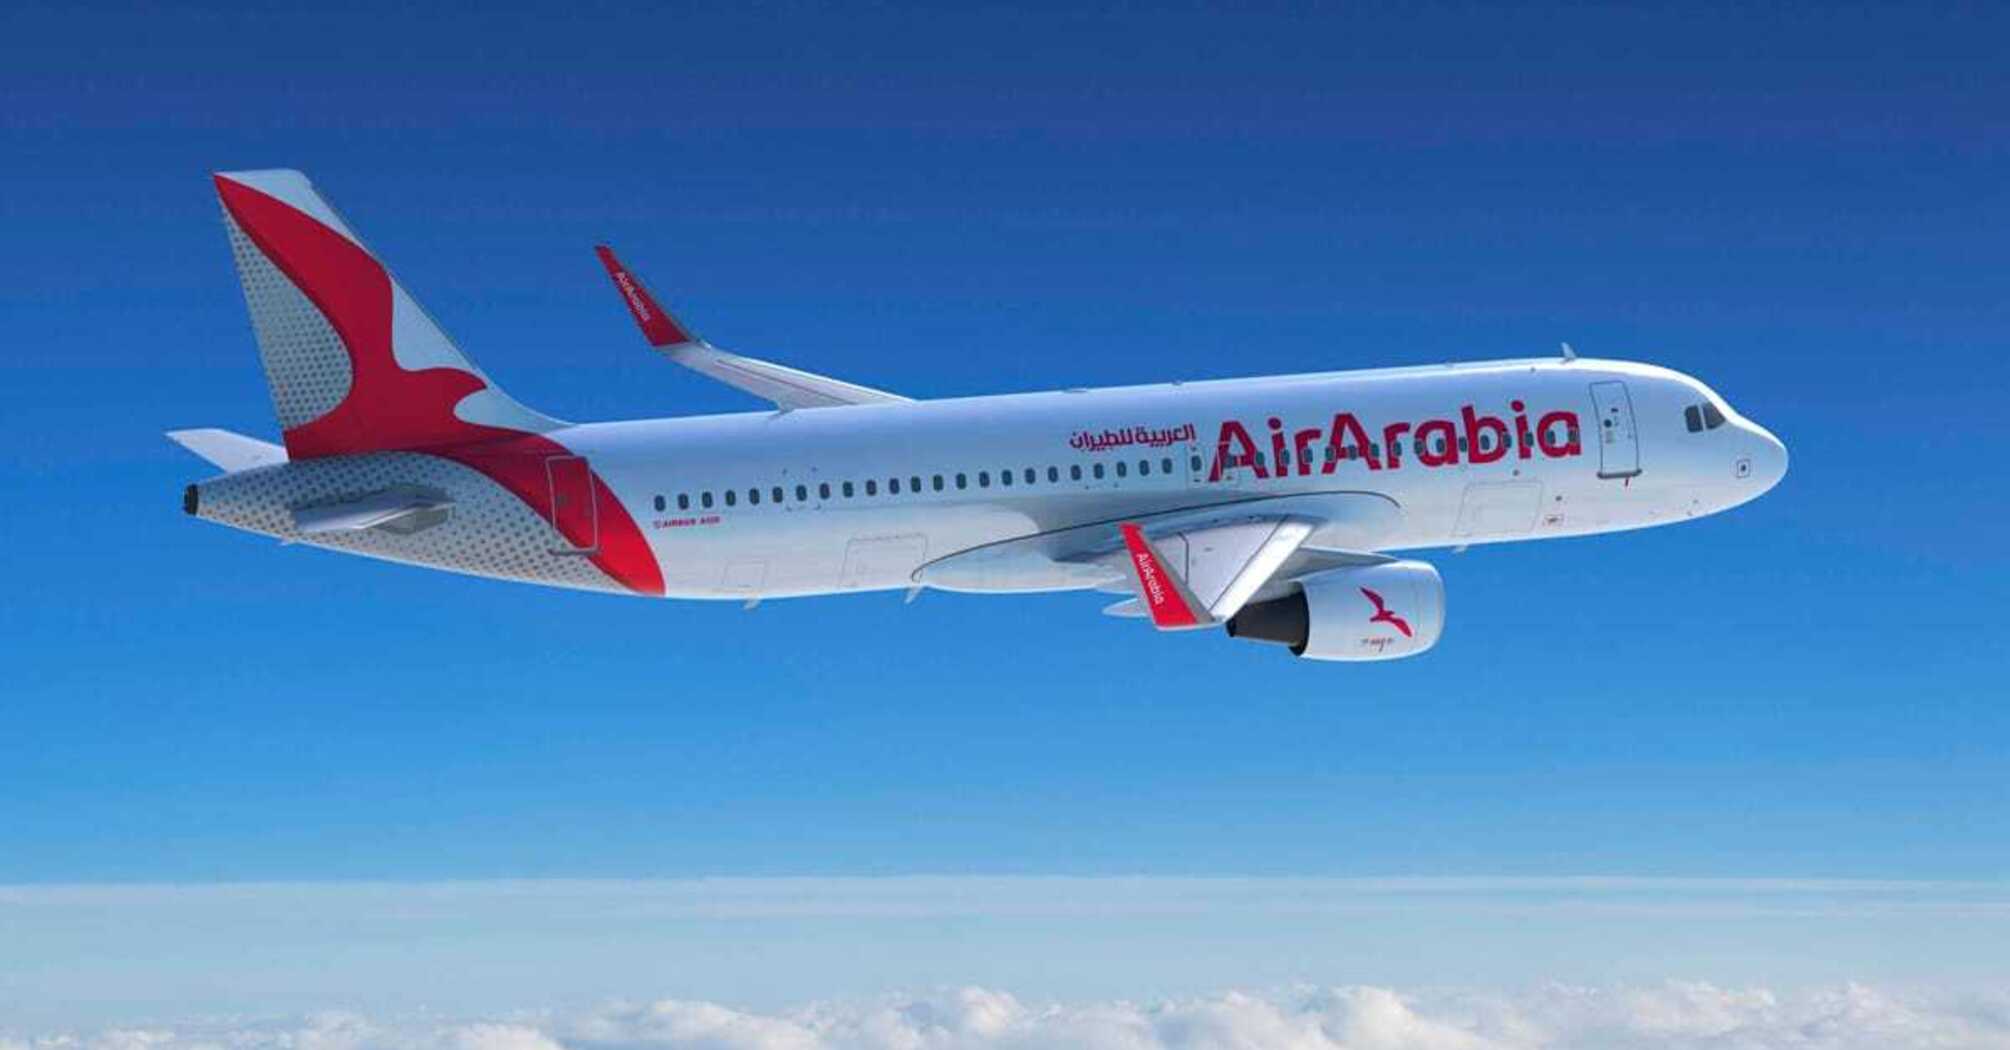 Air Arabia Egypt will launch new flights